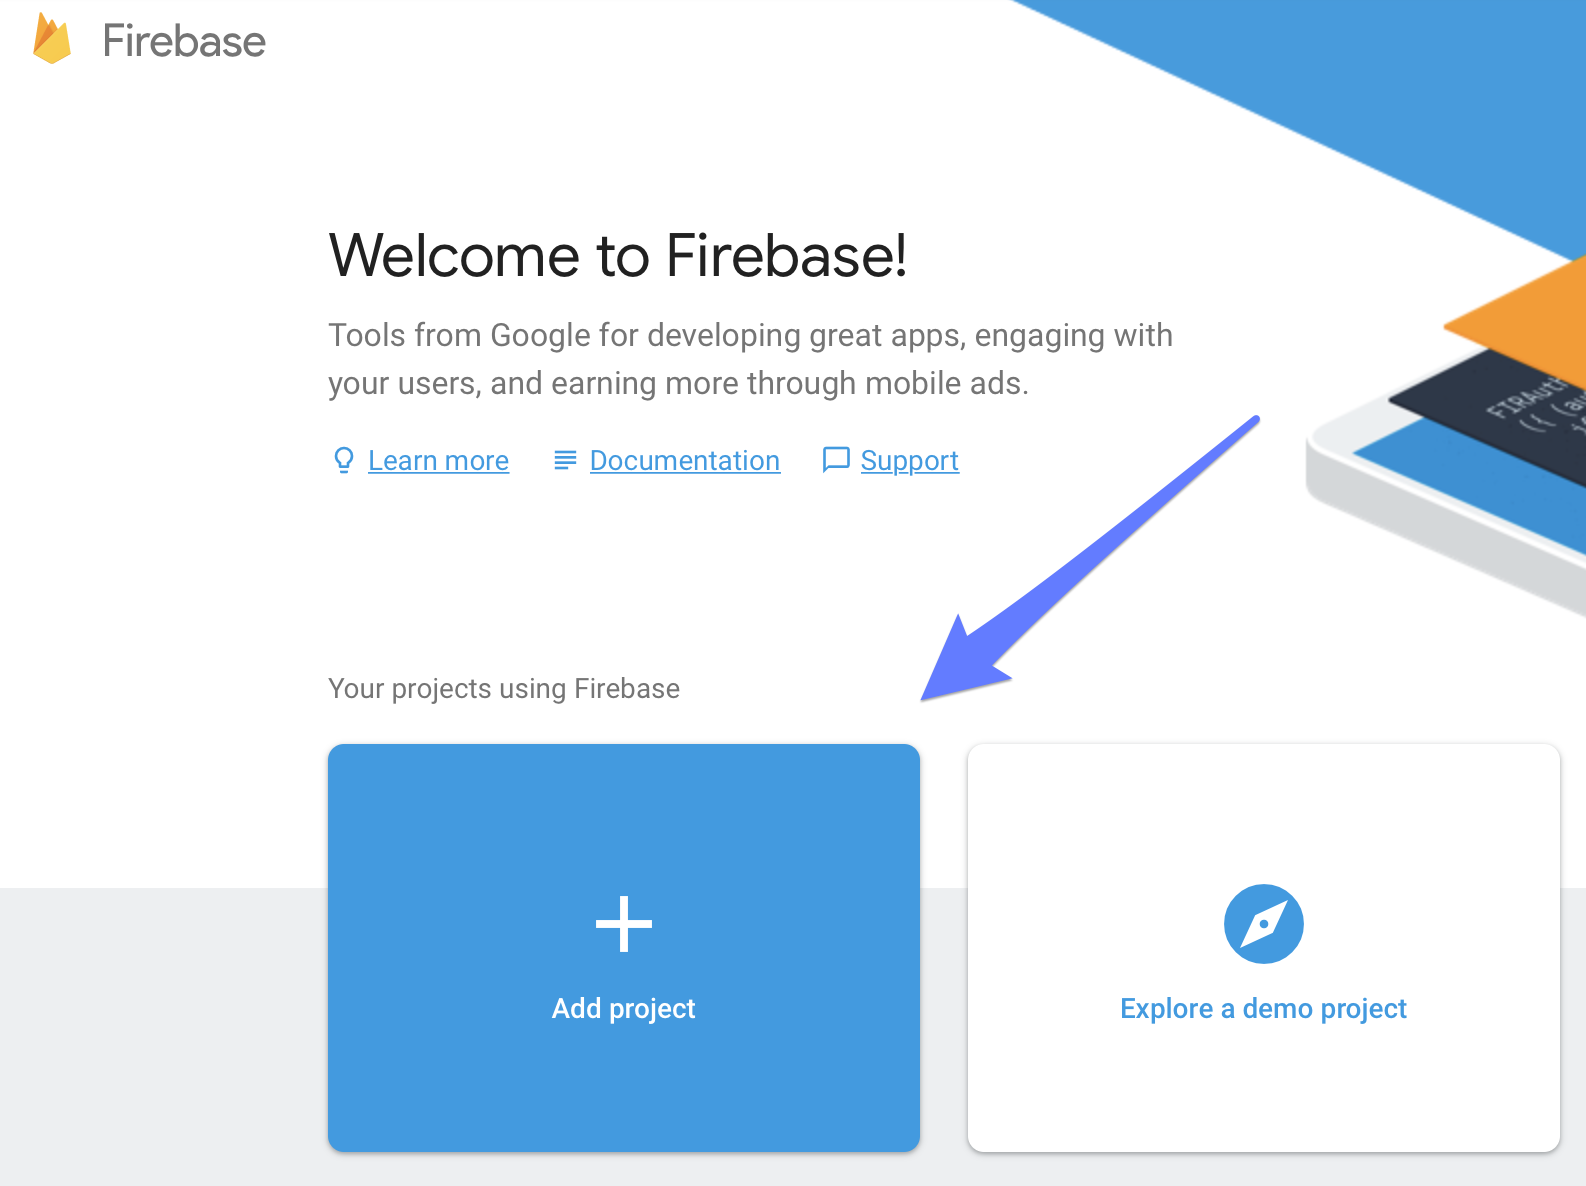 Welcome to Firebase screen